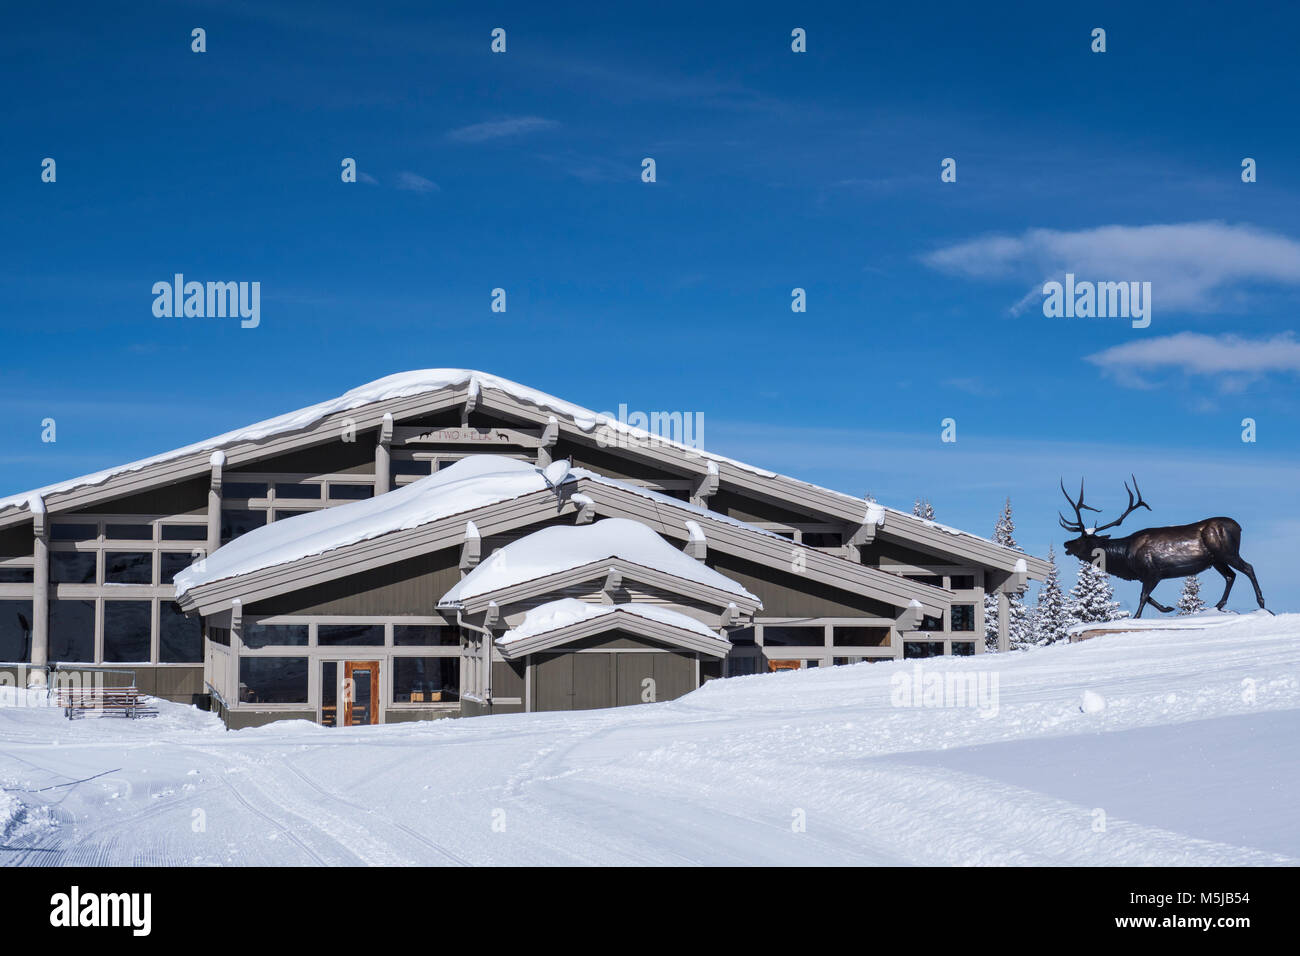 Due Elk giorno Lodge and Restaurant, inverno, Vail Ski Resort, Vail Colorado. Foto Stock